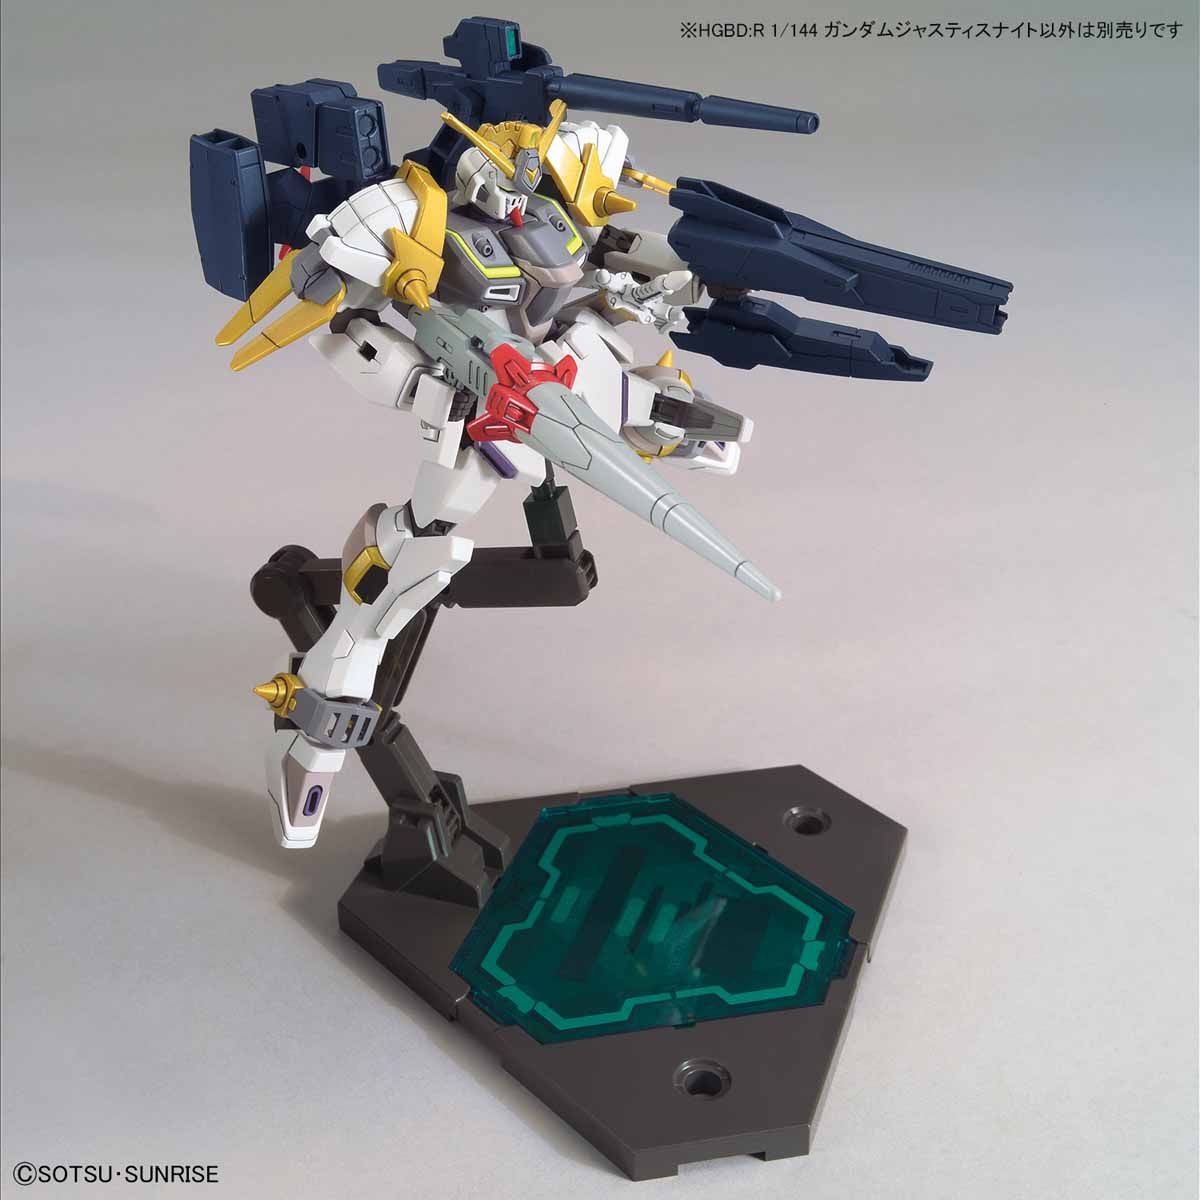 HGBD:R 1/144 Gundam Justice Knight - High Grade Gundam Build Divers Re:RISE | Glacier Hobbies